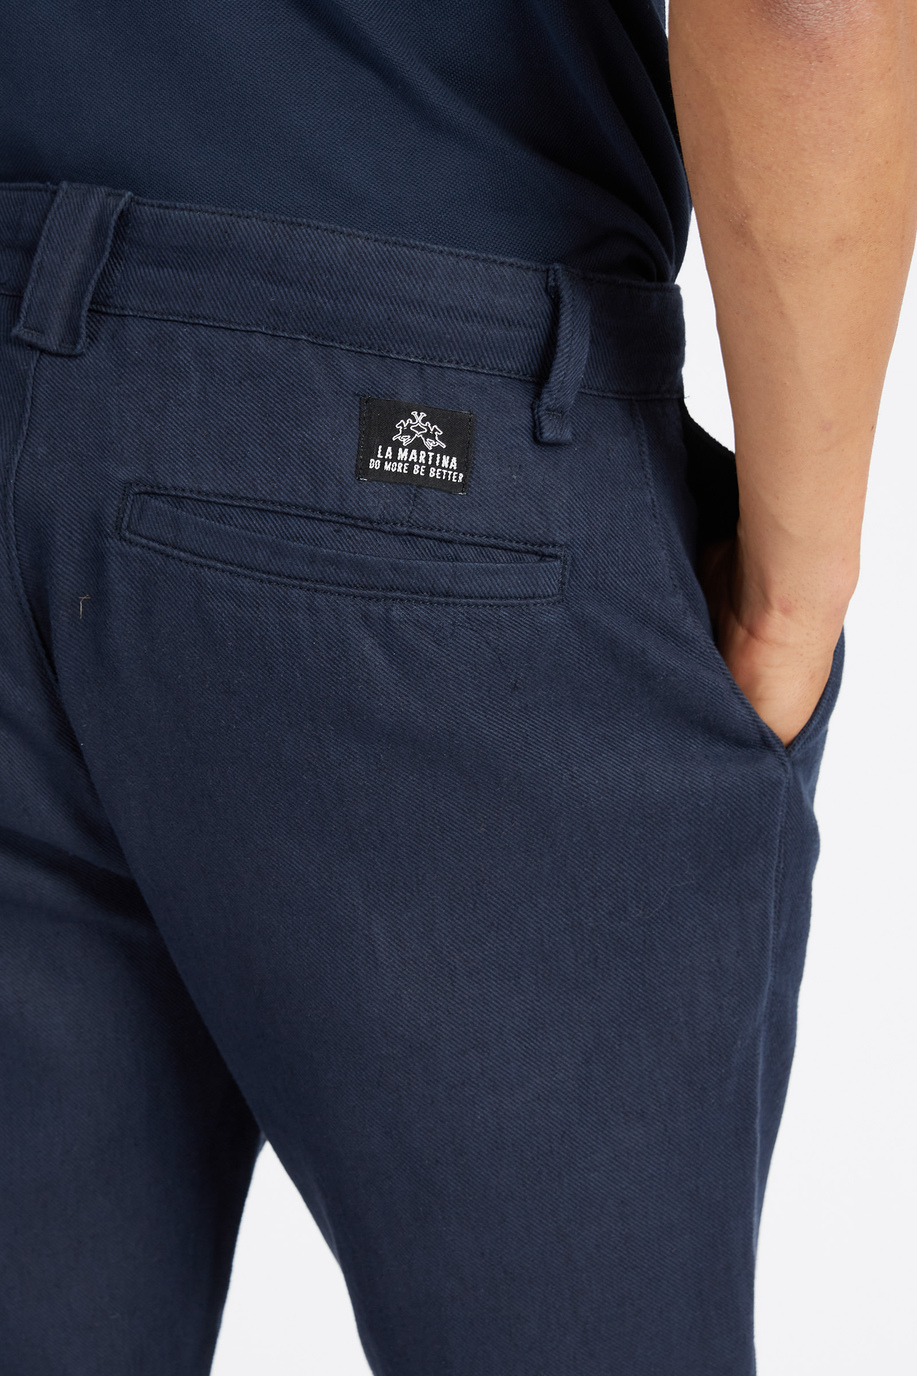 Pantalon chino homme coupe droite uni Logos - Vickan - Giftguide | La Martina - Official Online Shop